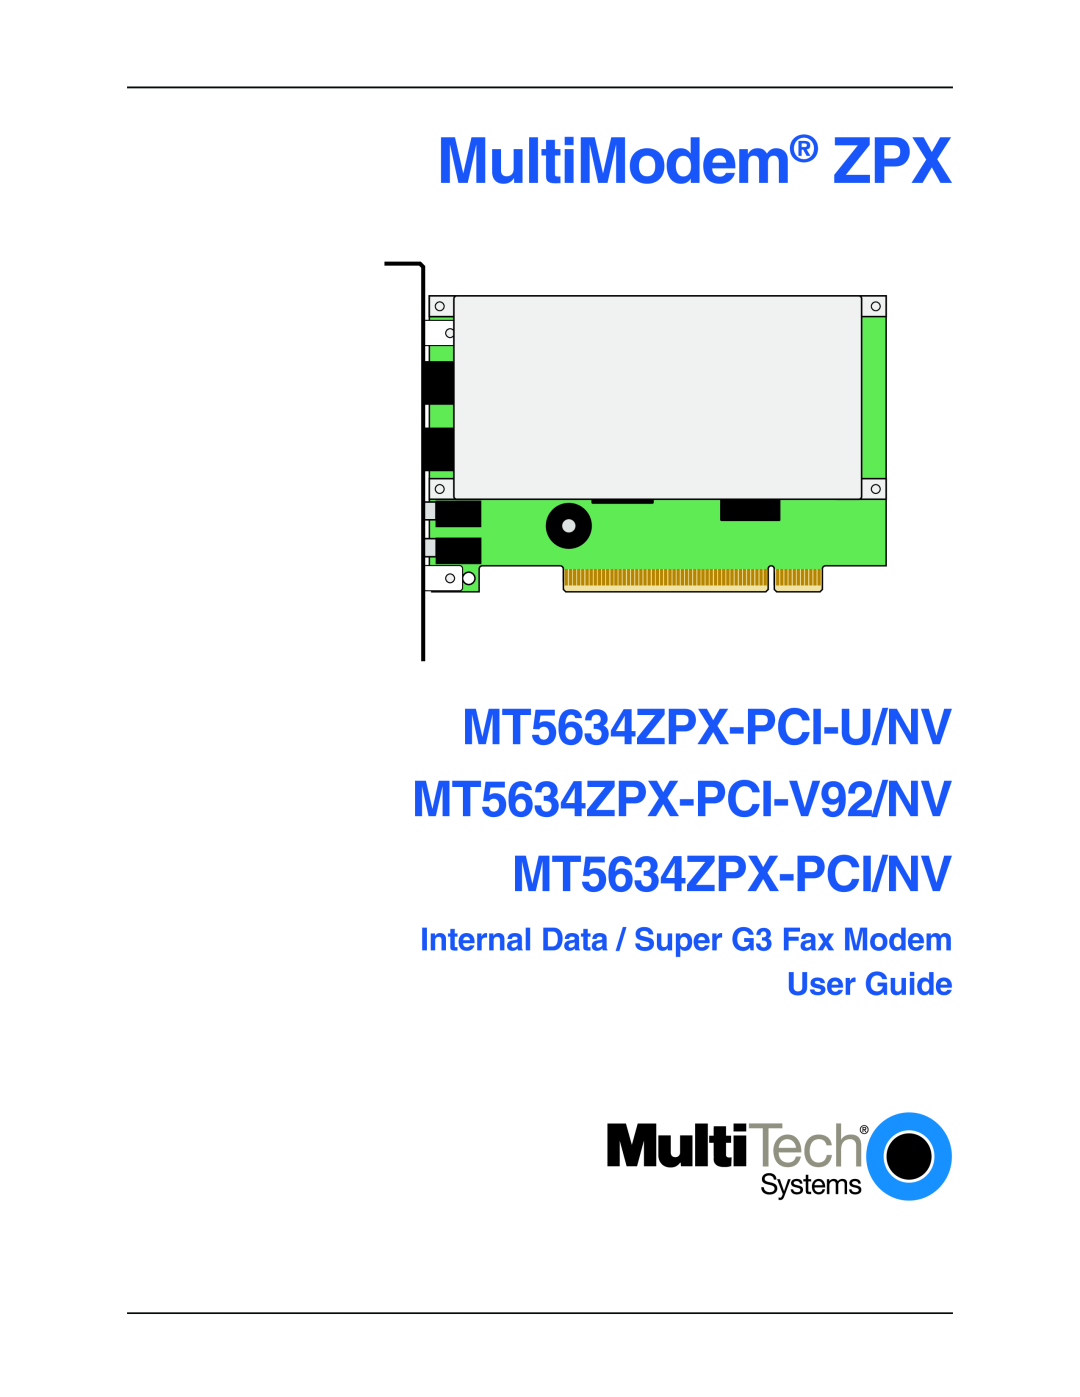 Multi-Tech Systems manual MultiModem ZPX, MT5634ZPX-PCI-U/NV MT5634ZPX-PCI-V92/NV MT5634ZPX-PCI/NV 